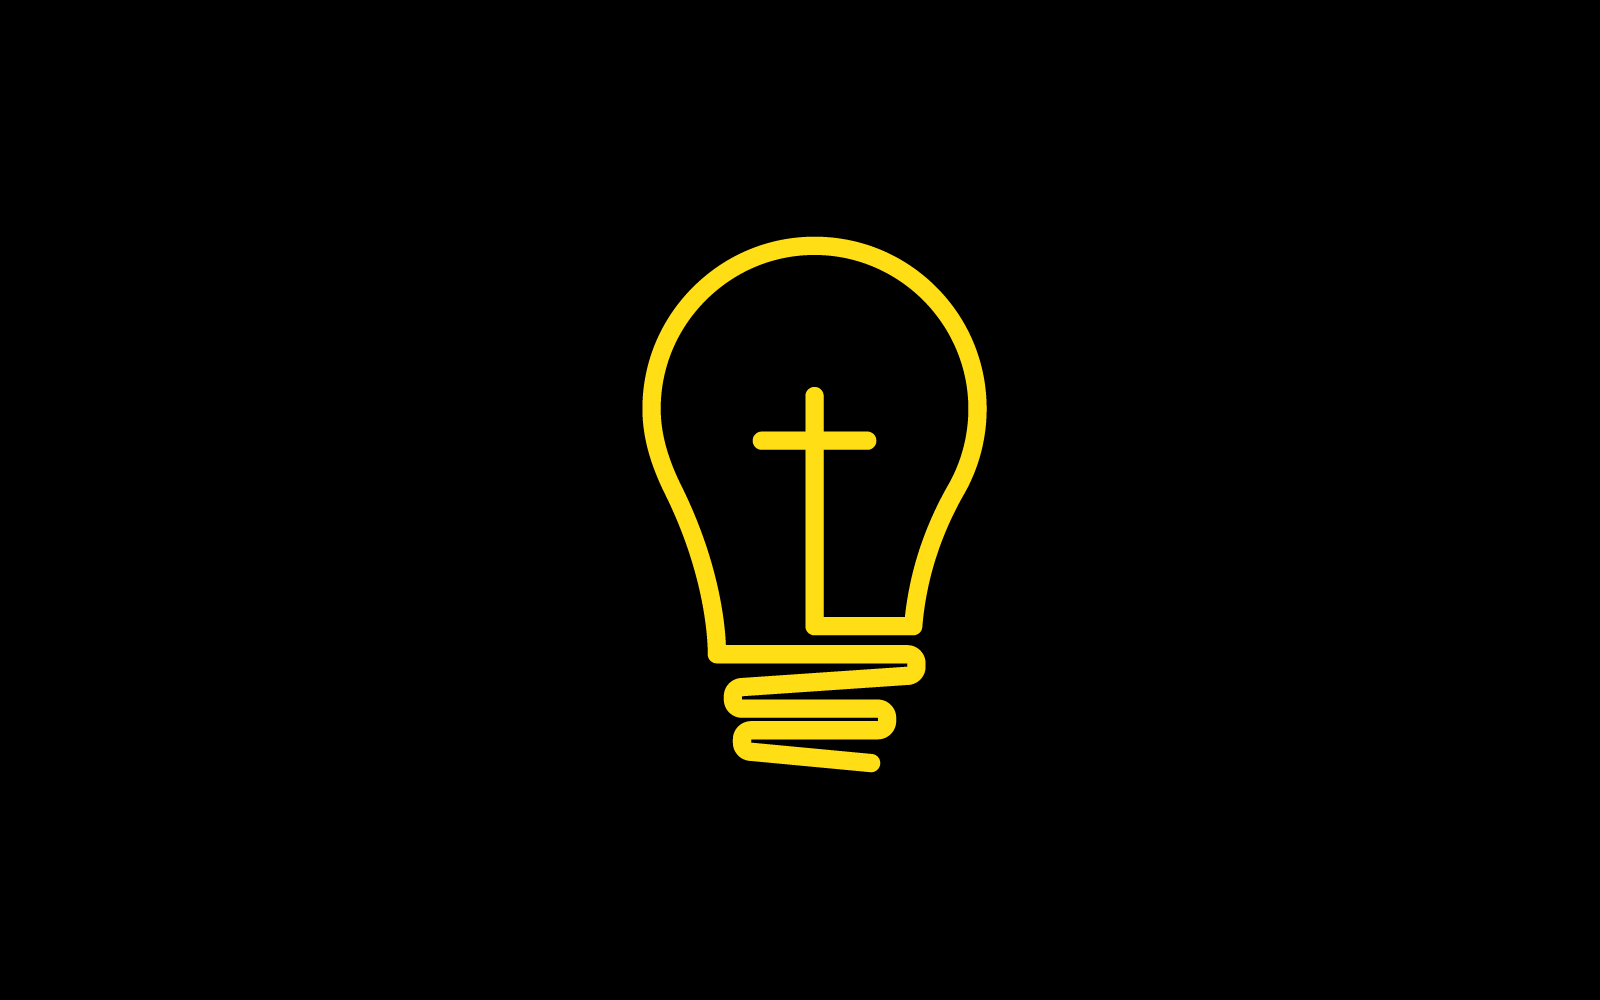 Church and bulb ilustration logo vector design